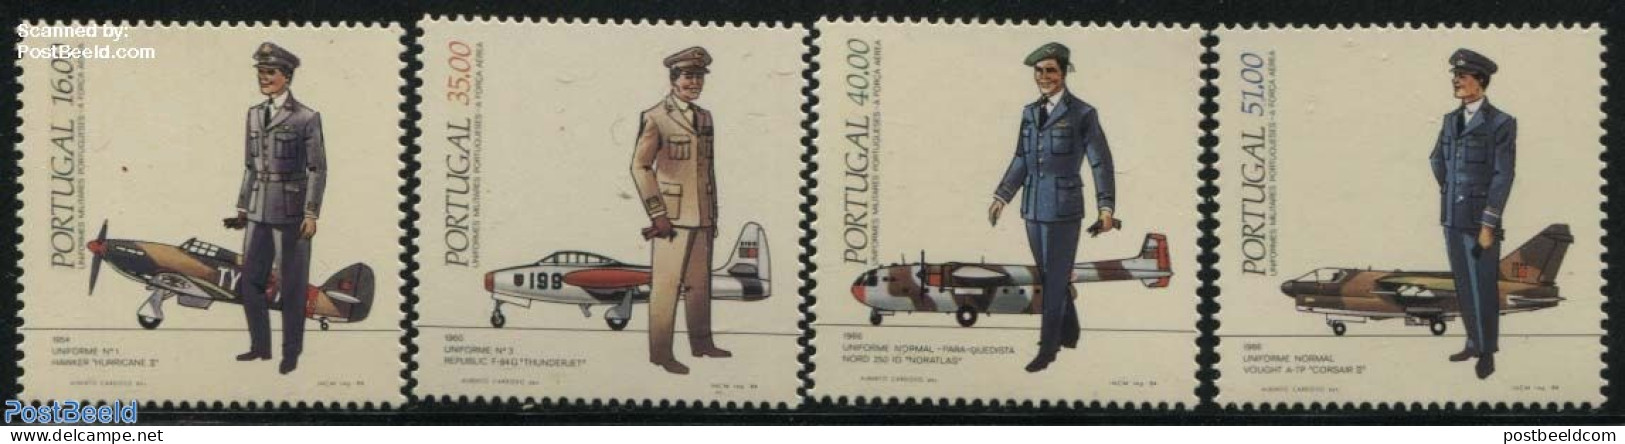 Portugal 1984 Uniforms & Aeroplanes 4v, Mint NH, Transport - Various - Aircraft & Aviation - Uniforms - Neufs